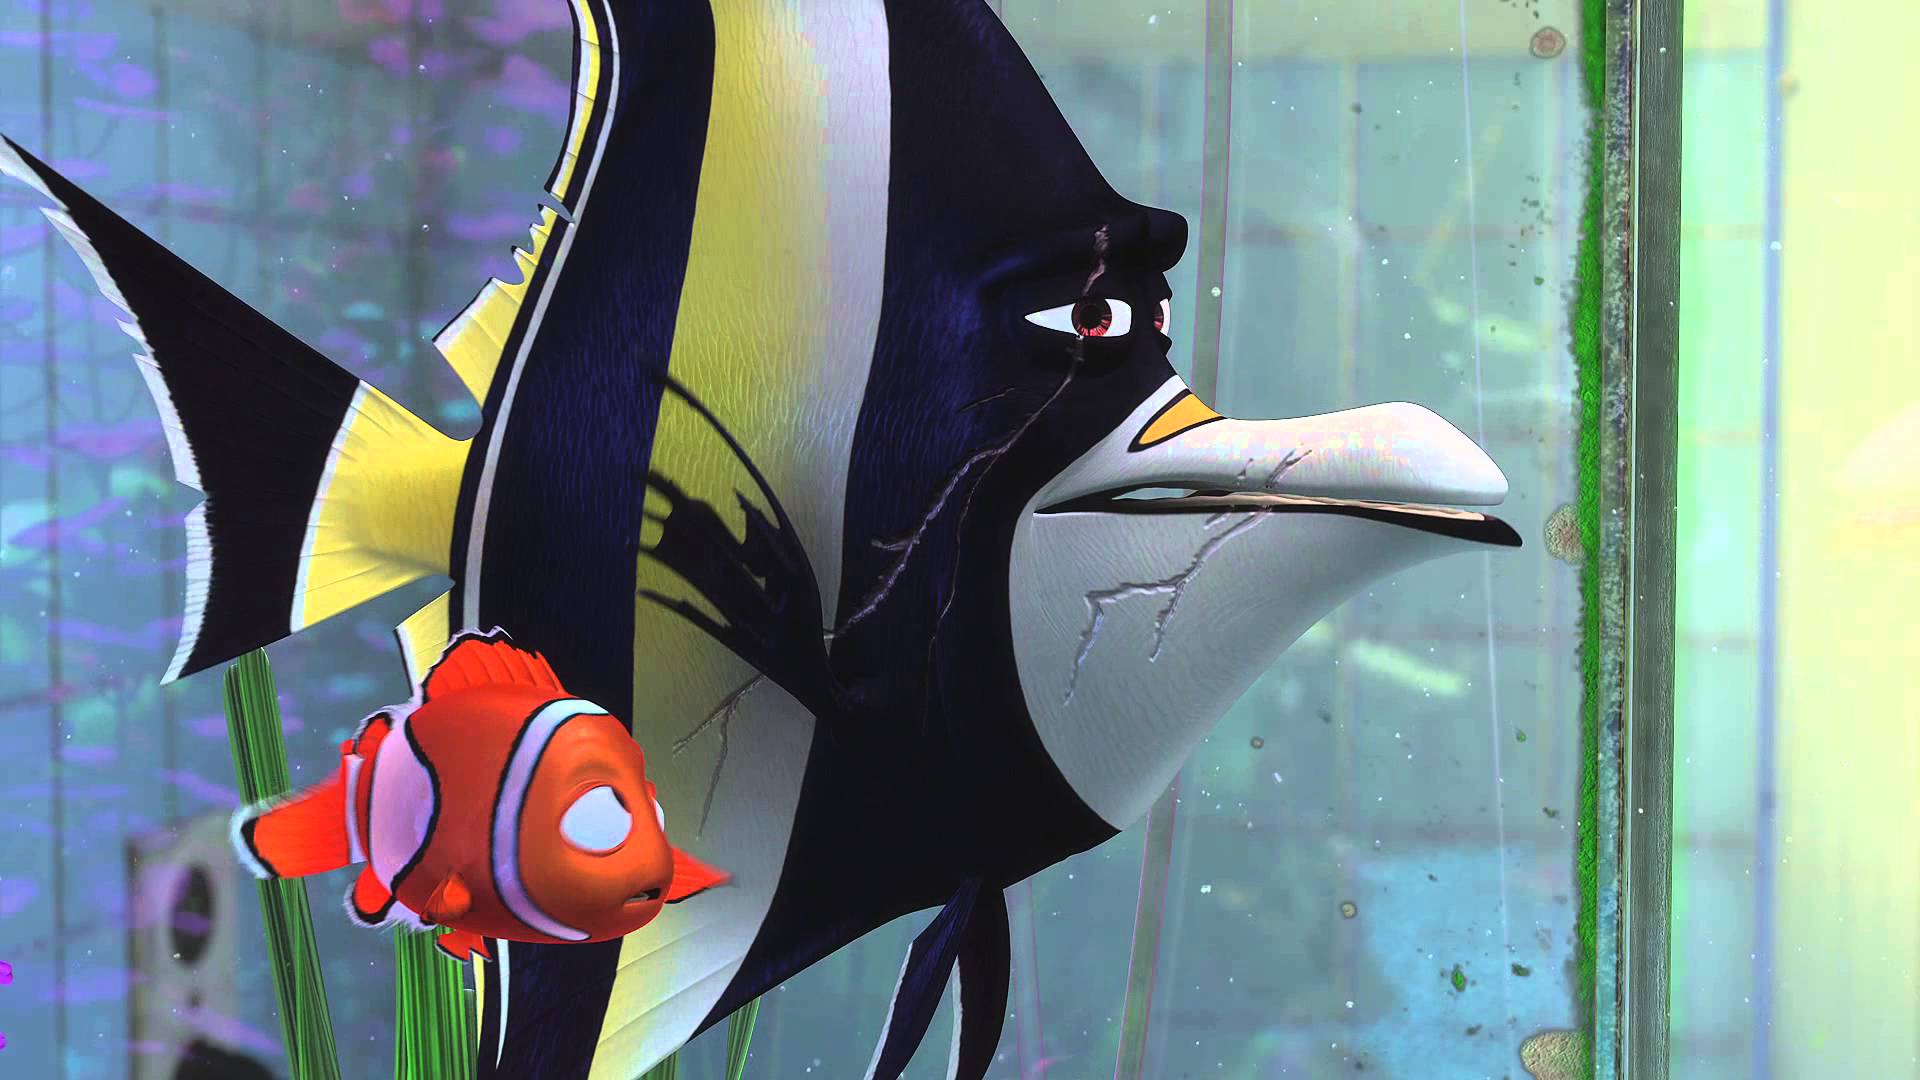 Finding Nemo (2003) - Finding Dory (2016)